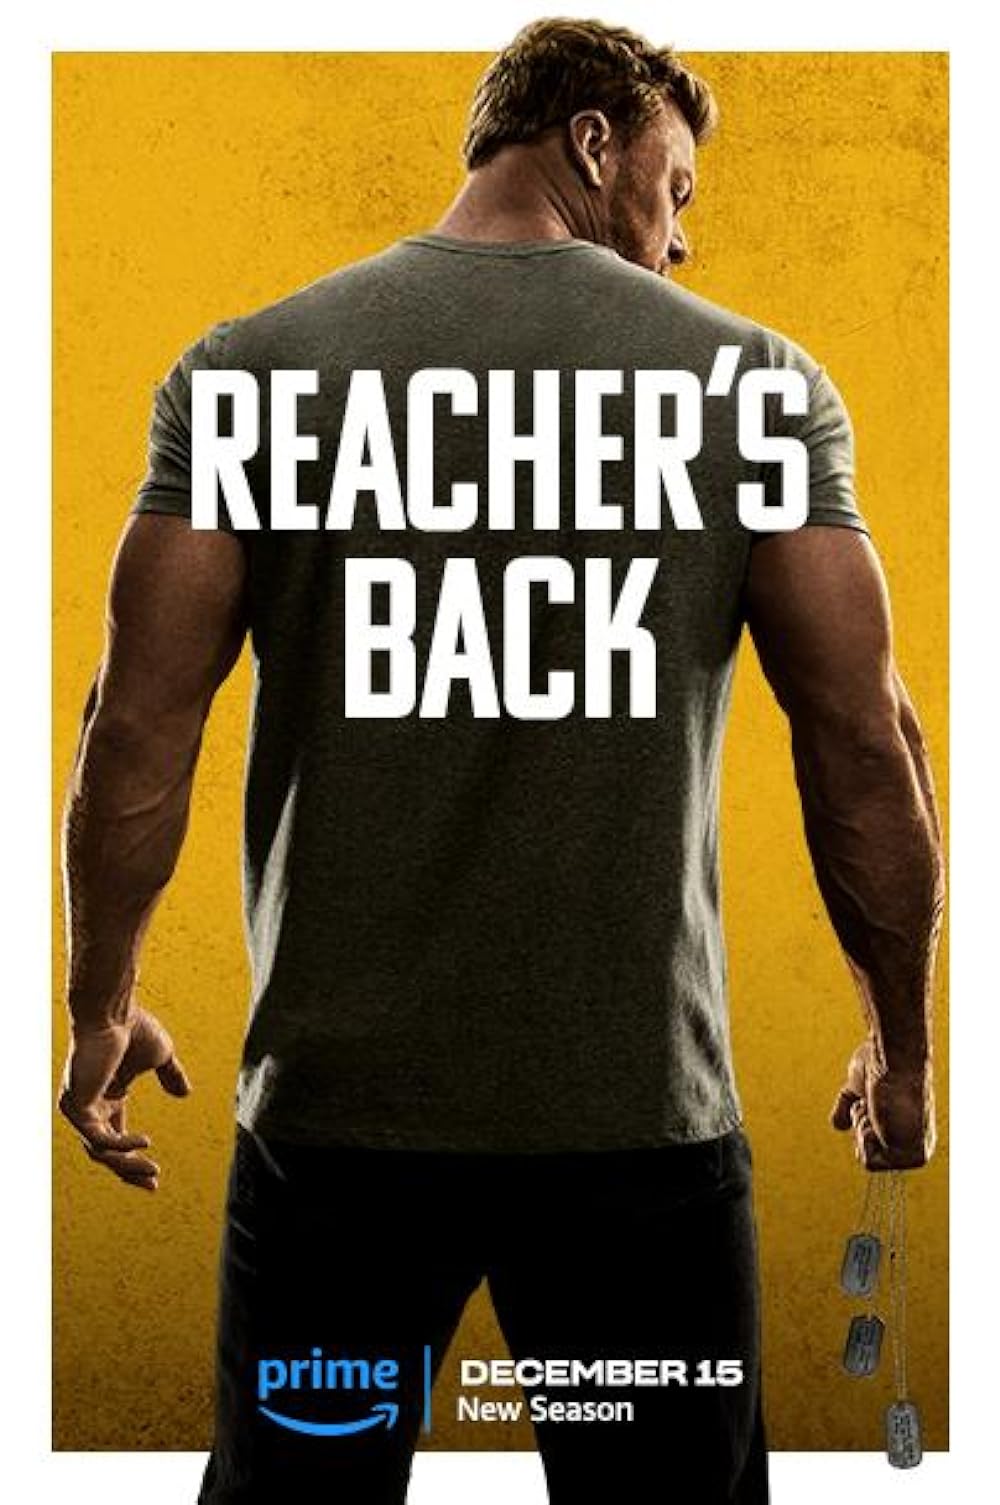 Reacher season 2 (December 15) - Streaming on Prime Video